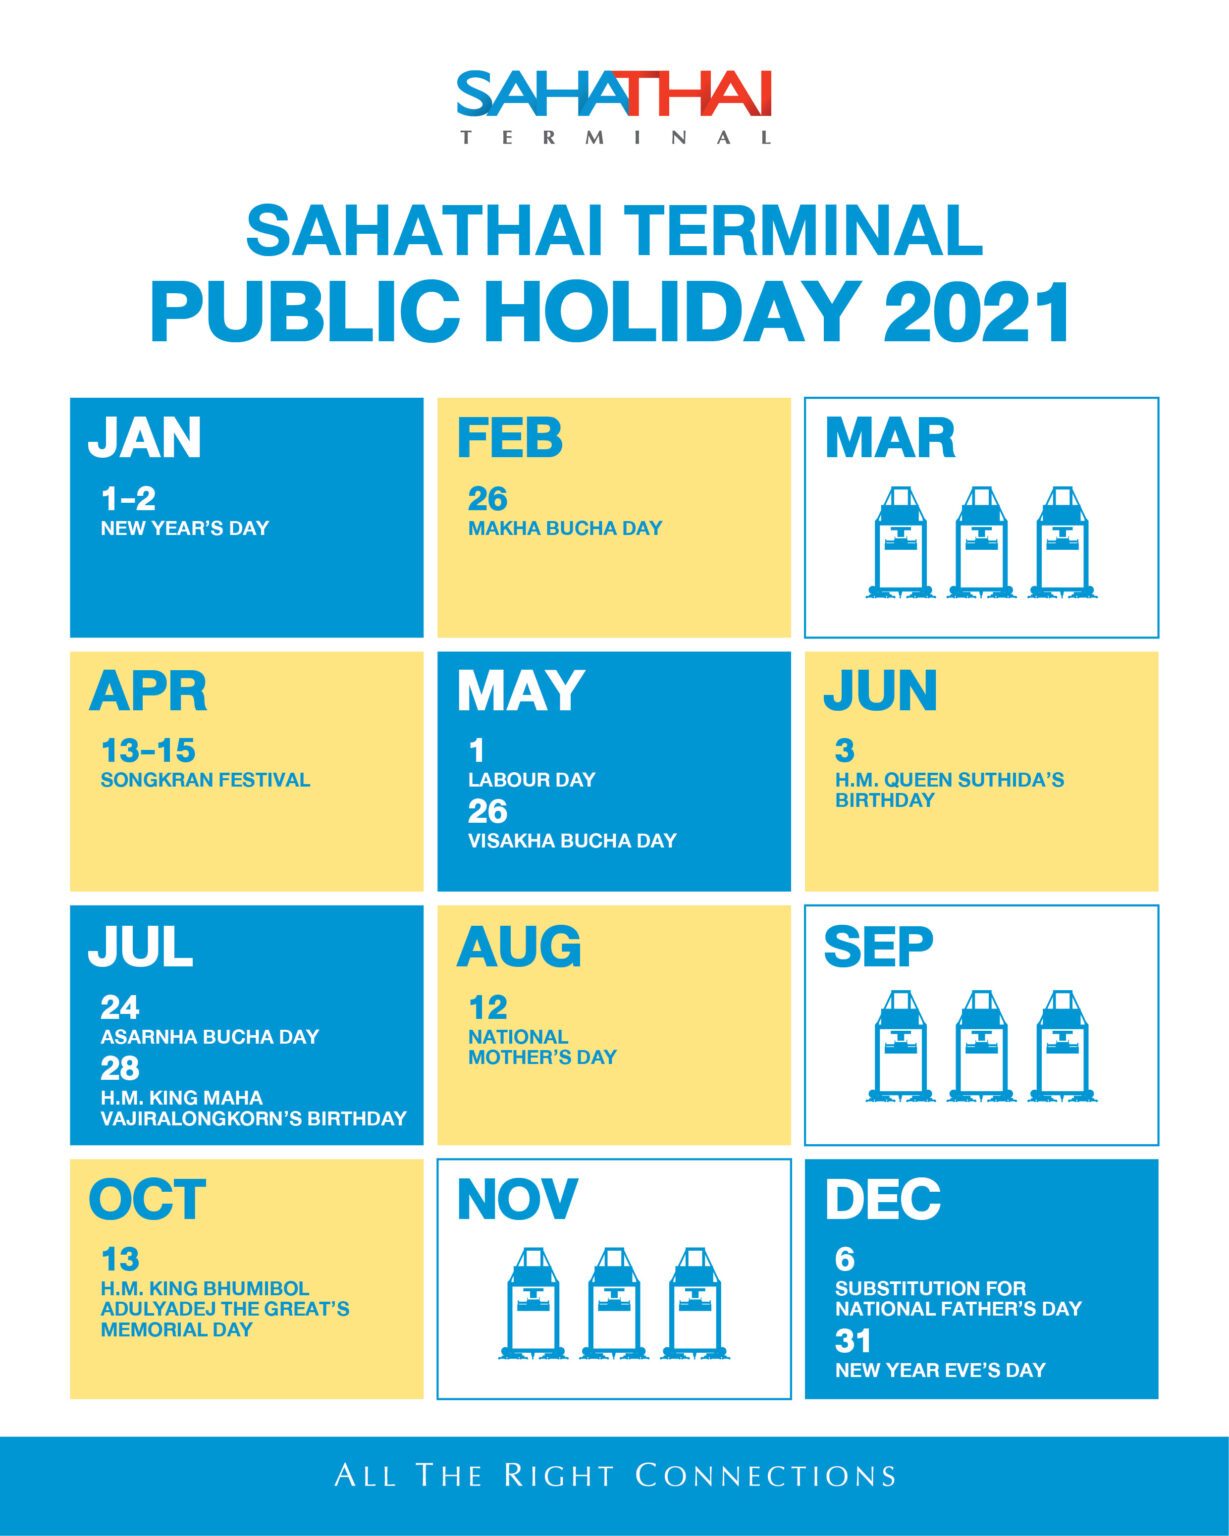 Public Holiday 2021 Sahathai Terminal